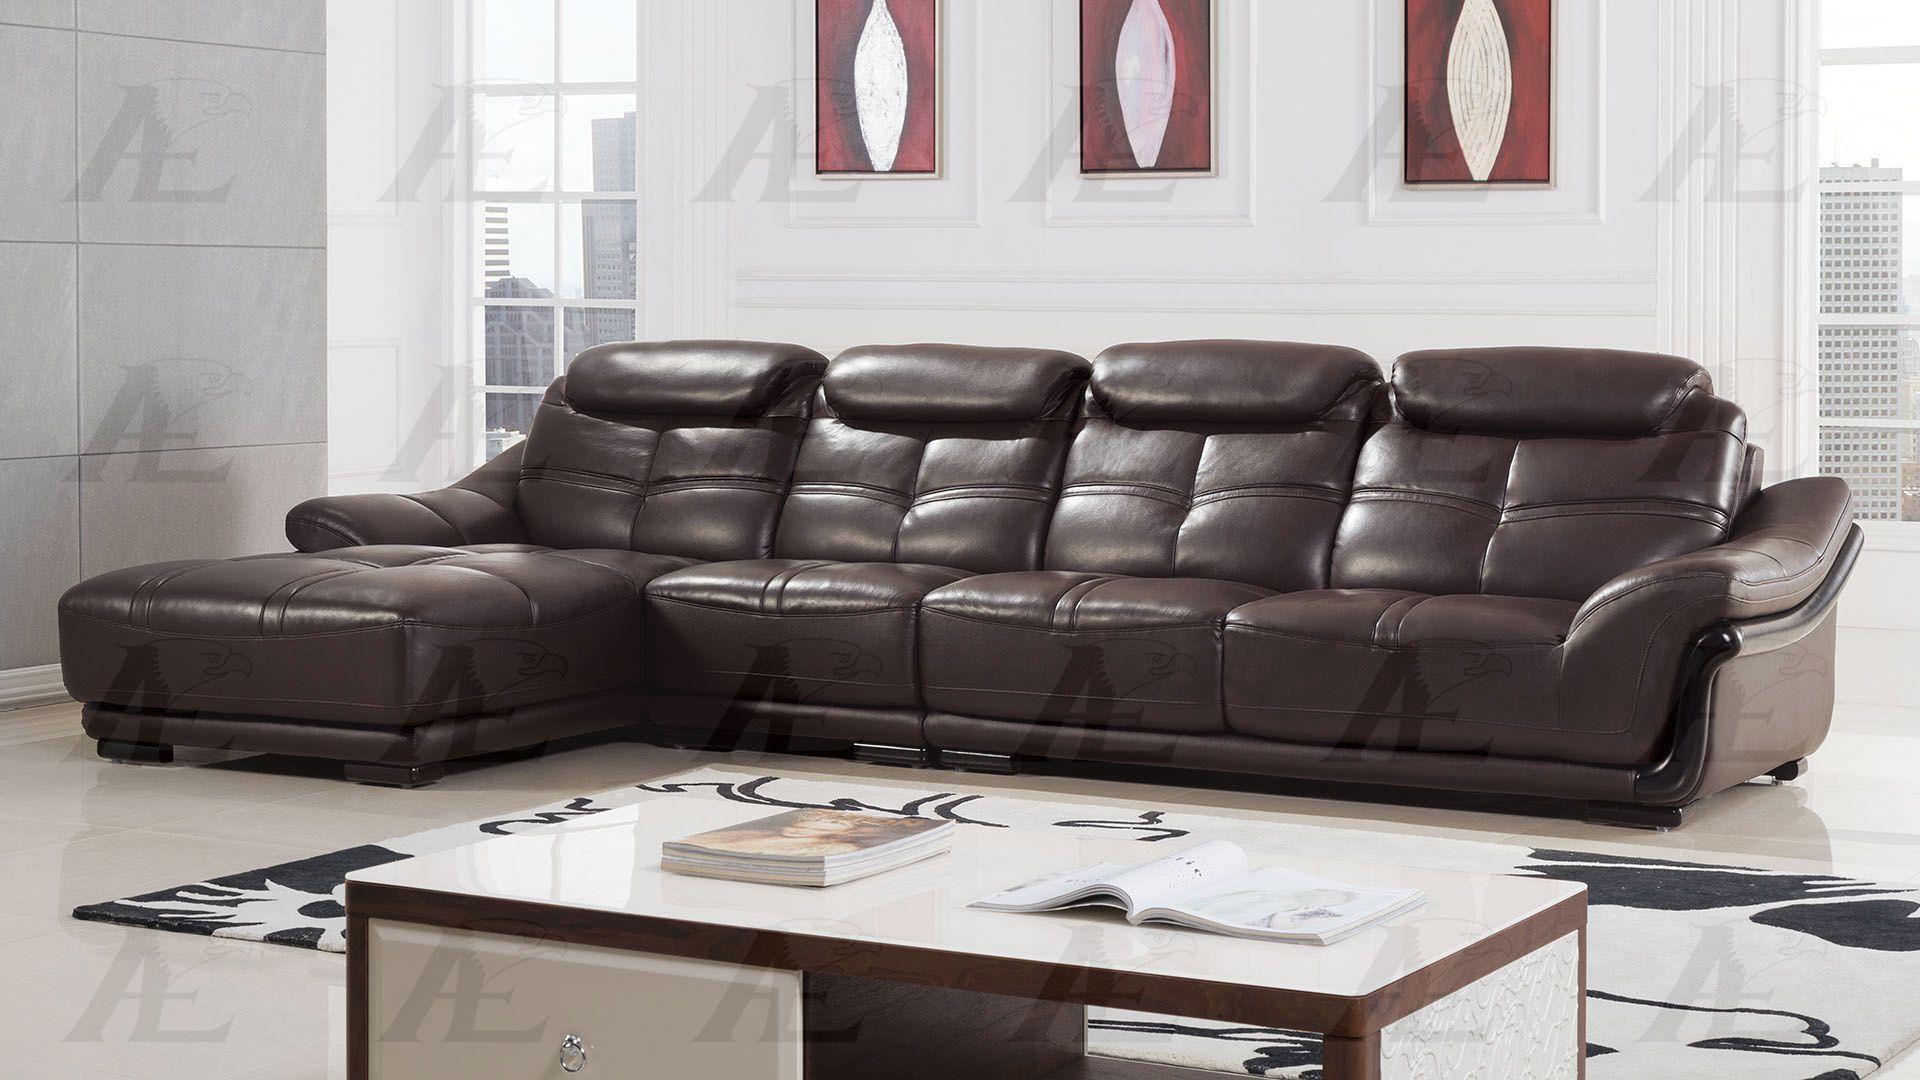 

    
American Eagle Furniture EK-LB311-DC Dark Chocolate Genuine Leather Sectional LHC 3Pcs Set
